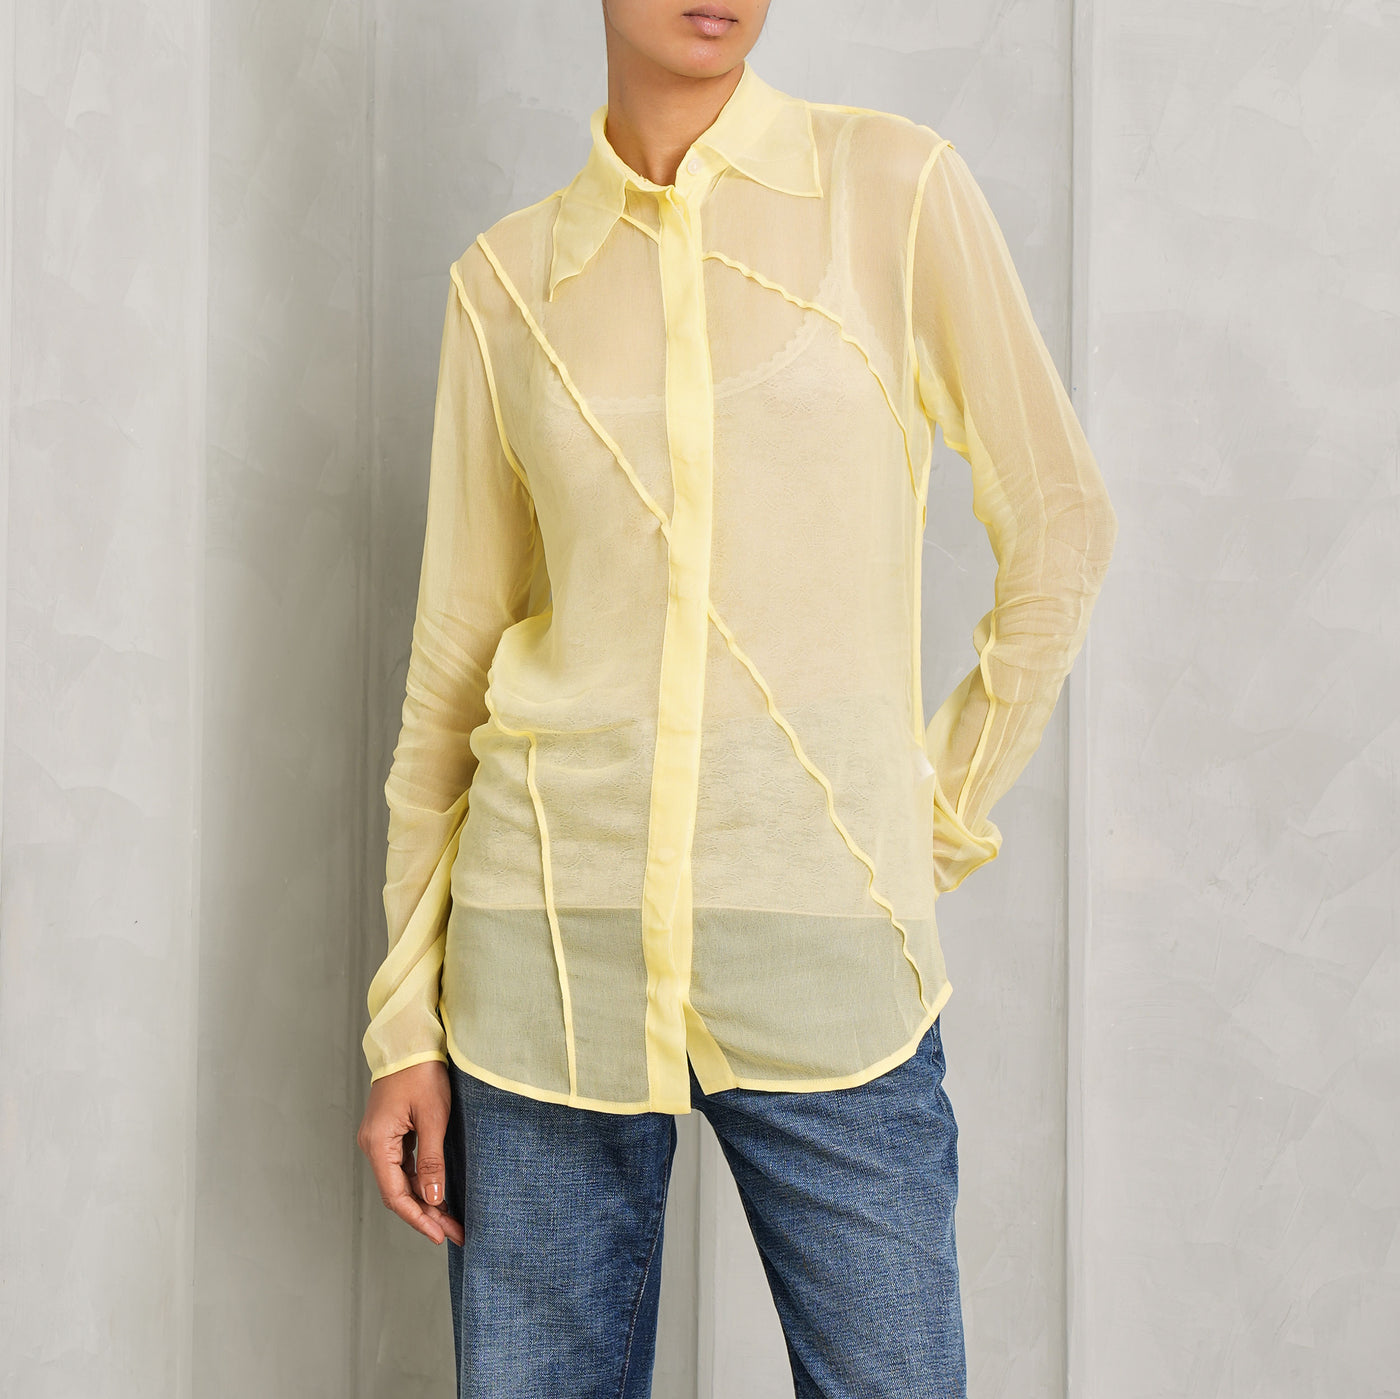 Victoria Beckham yellow georgette blouse